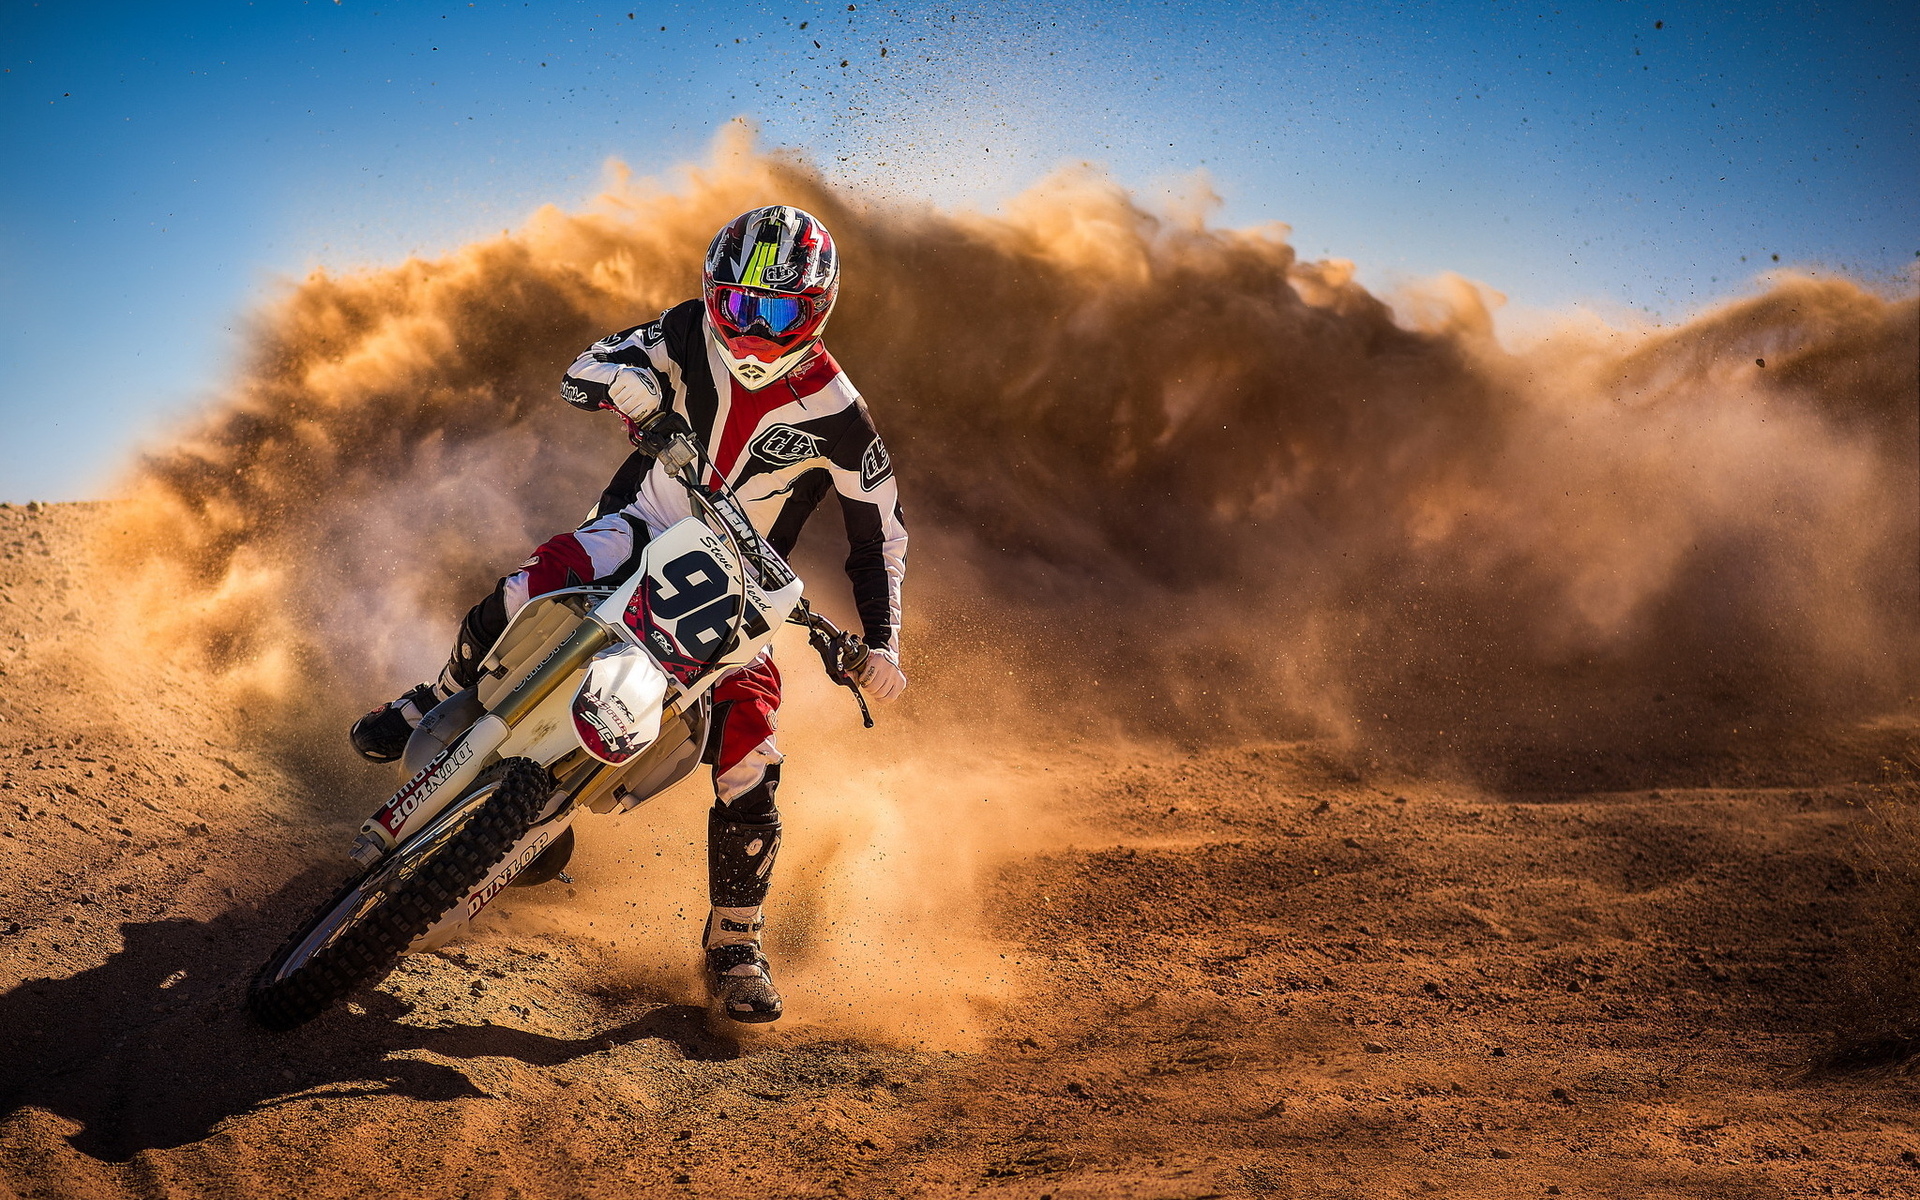 Motocross Biker Mud Racing Wallpaper - HDWallpaperFX